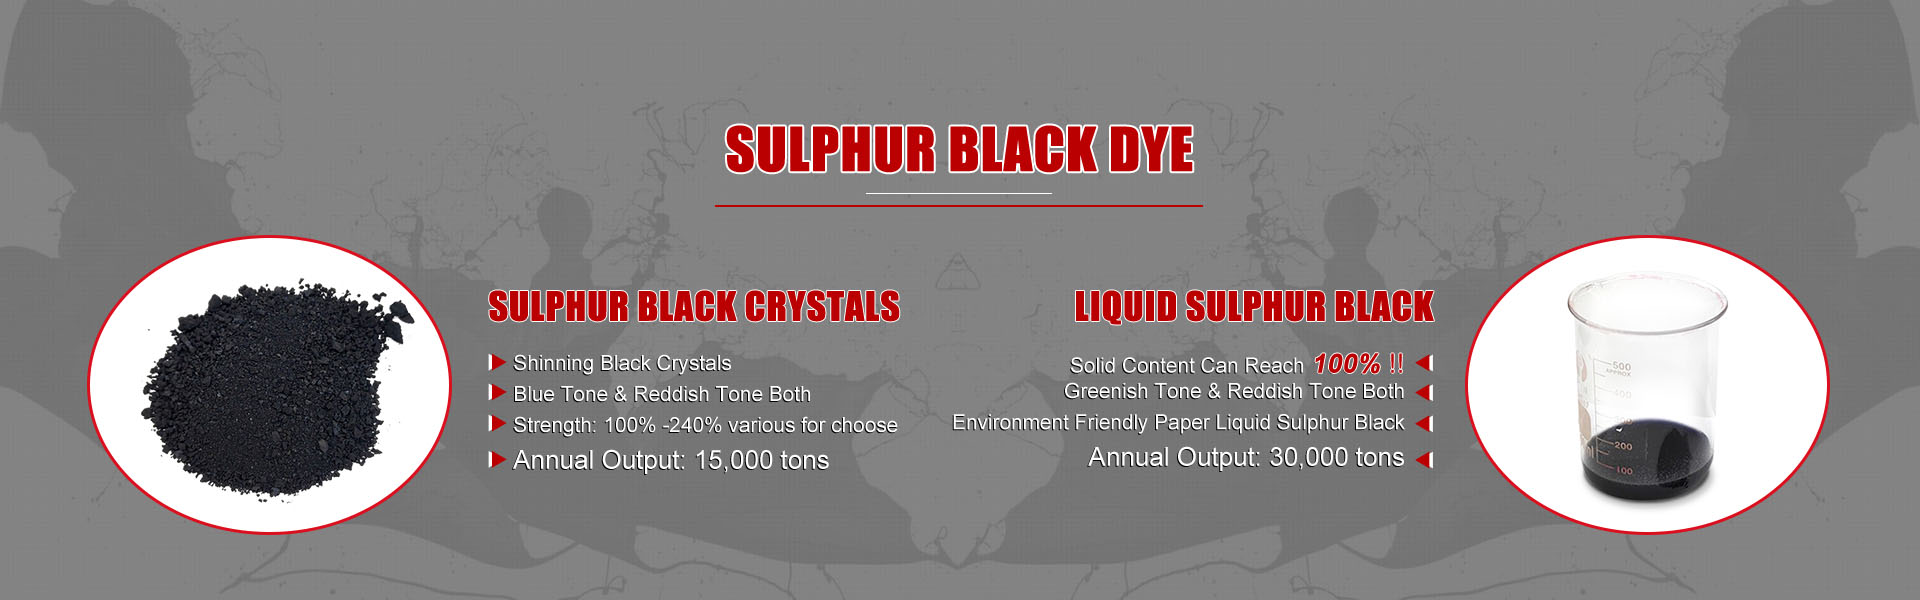 522 sulphur black br supplier